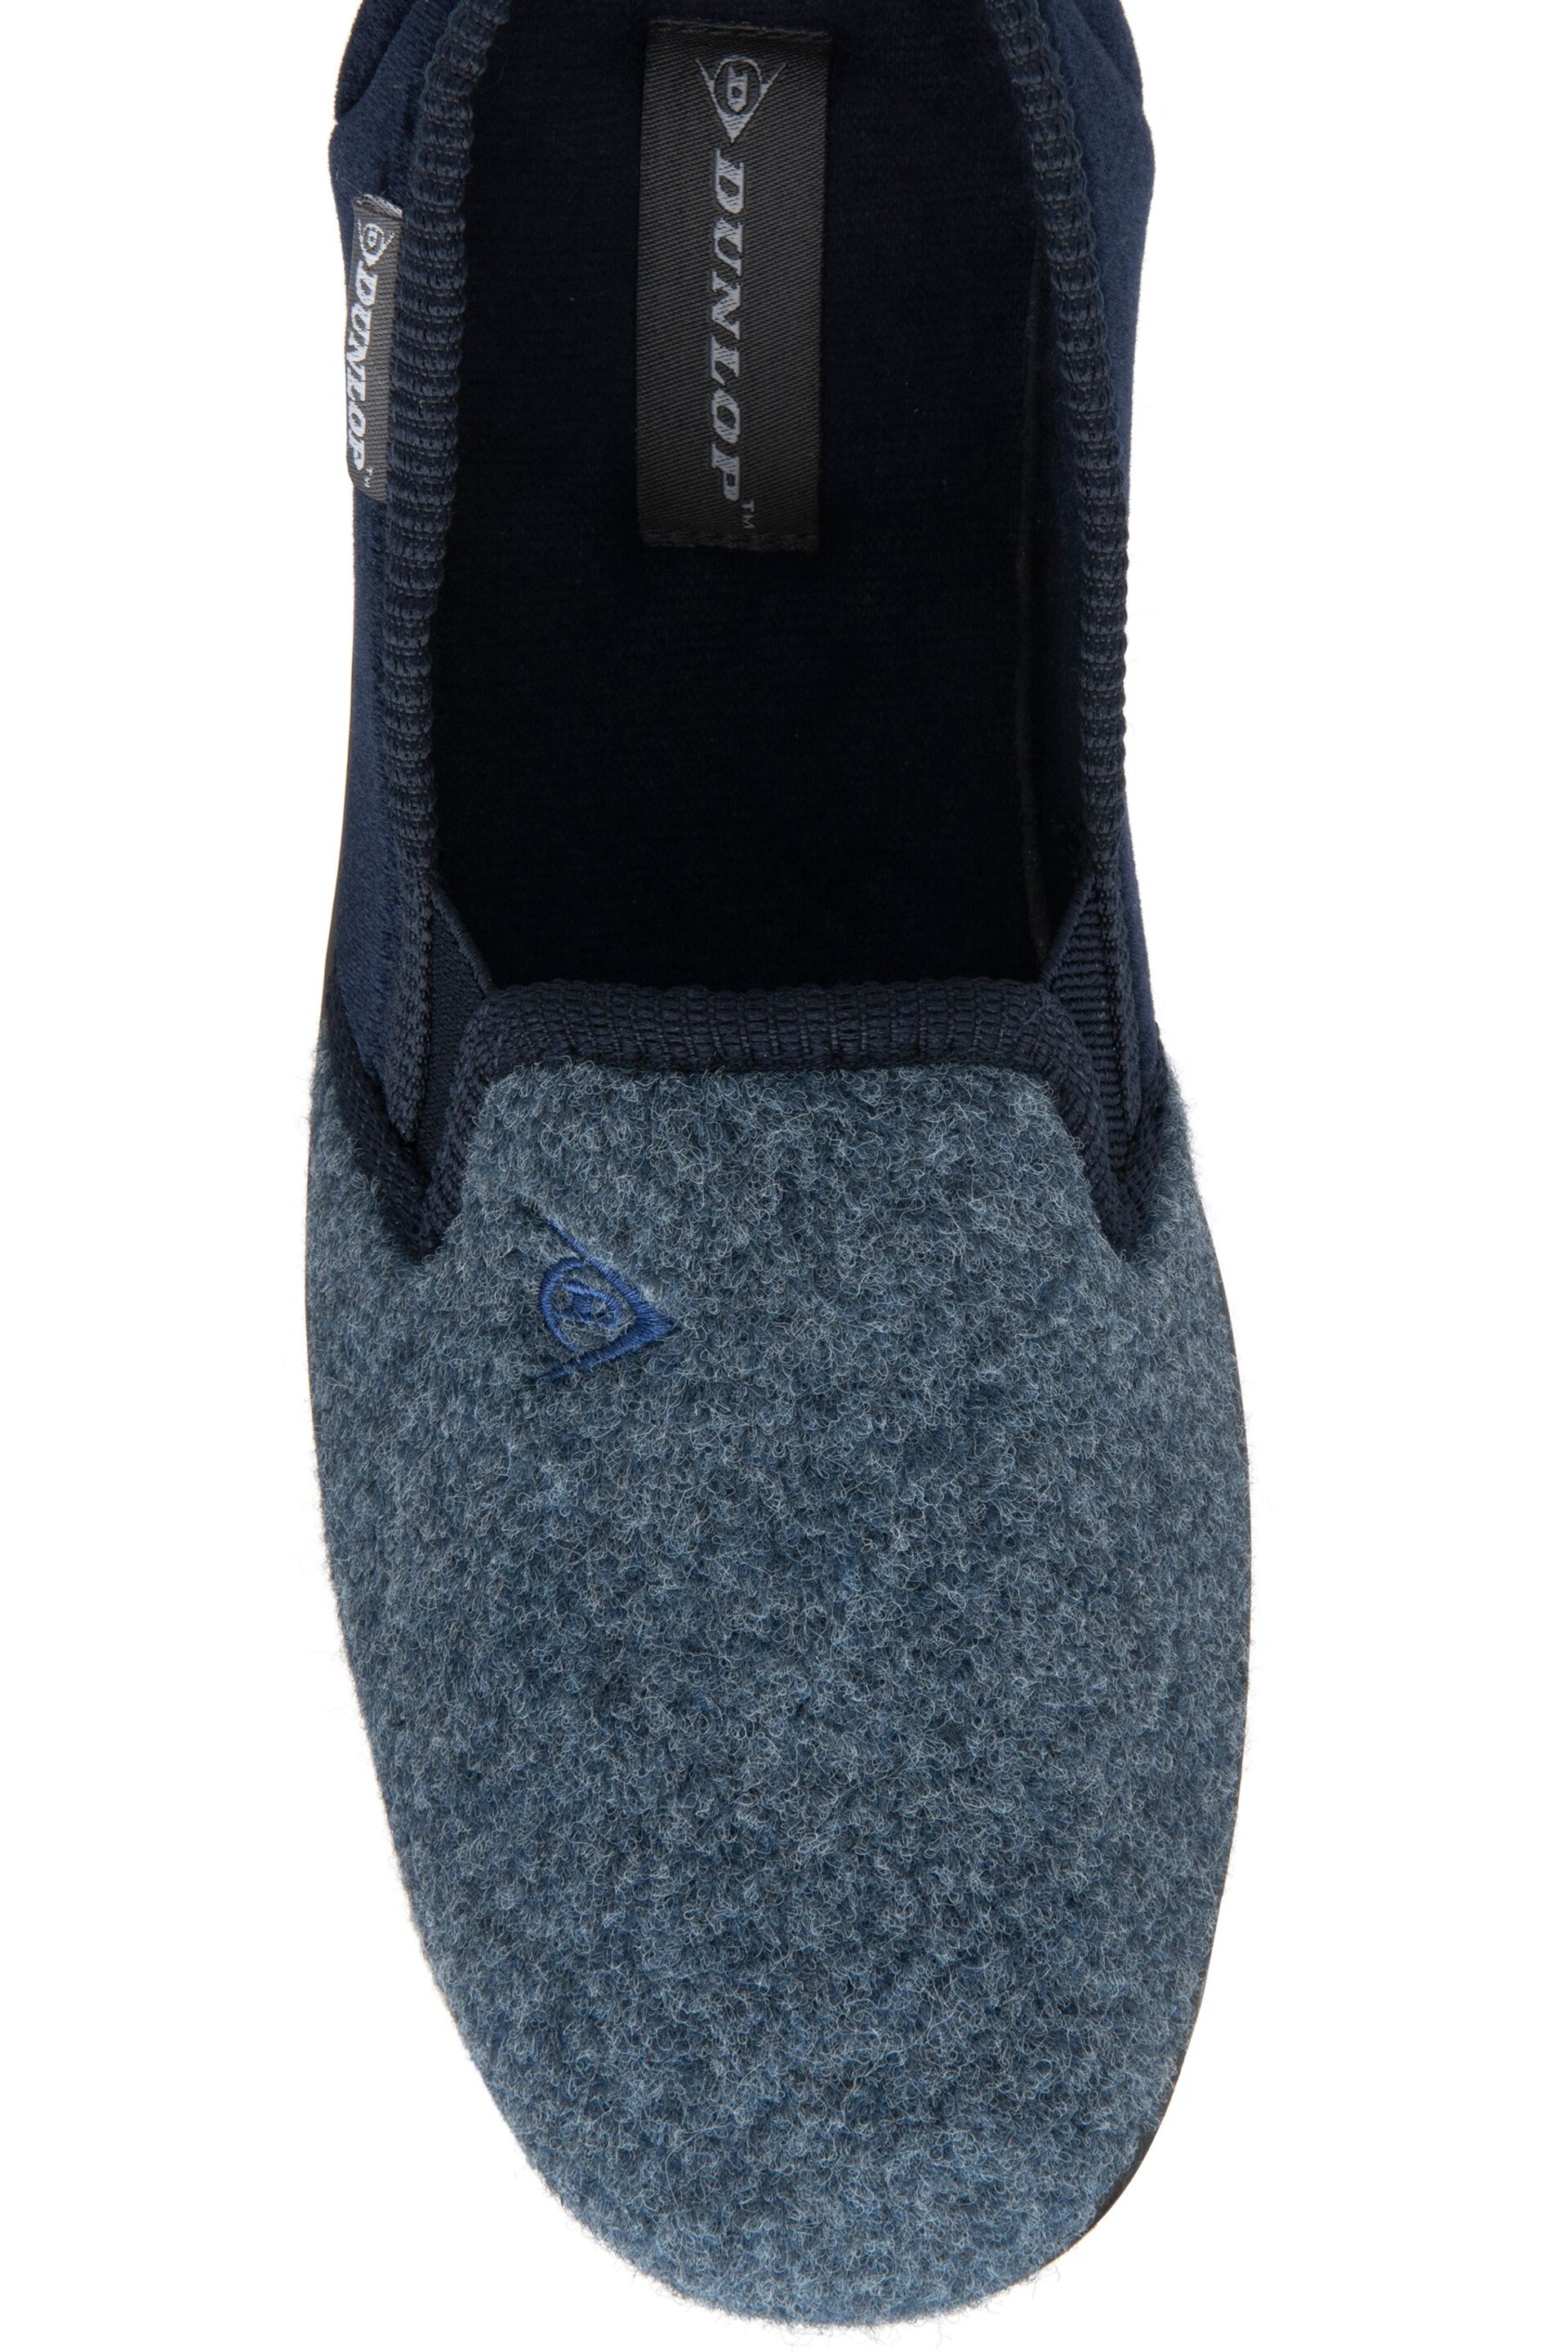 Dunlop Blue Mens Full Shoes Felt Slippers - Image 4 of 4